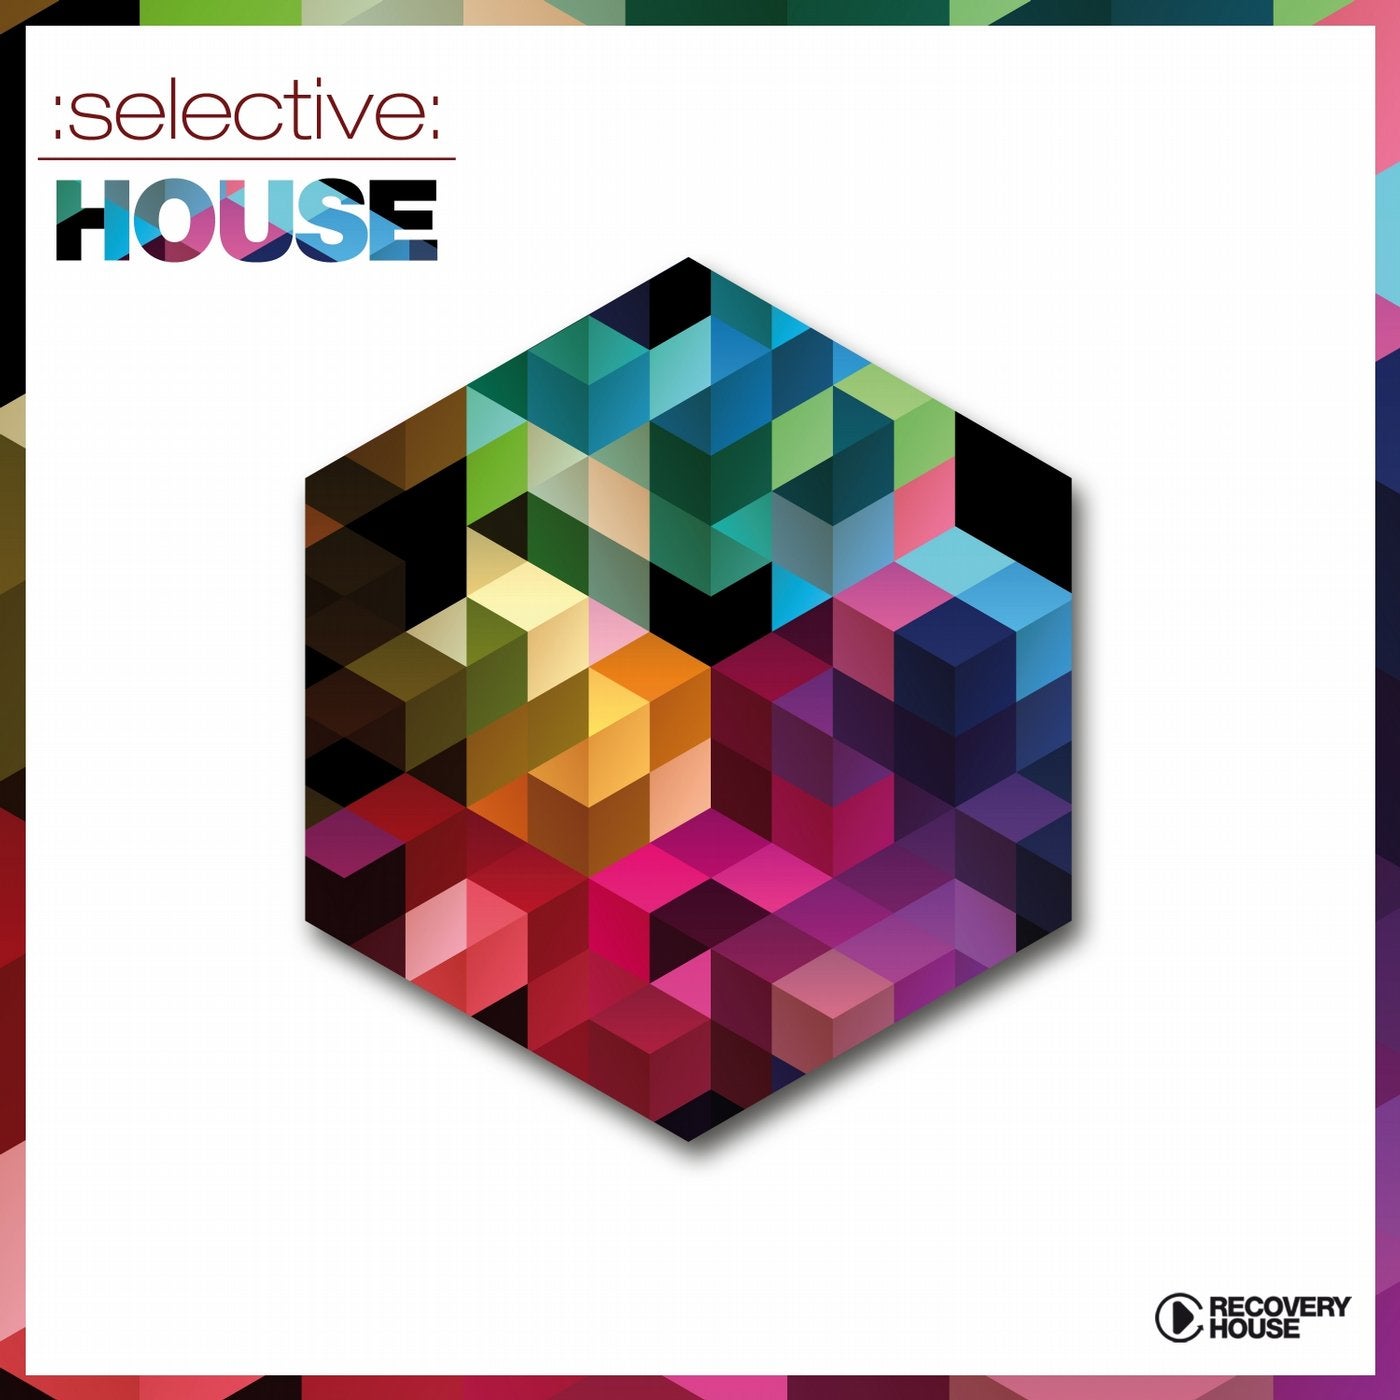 Selective: House